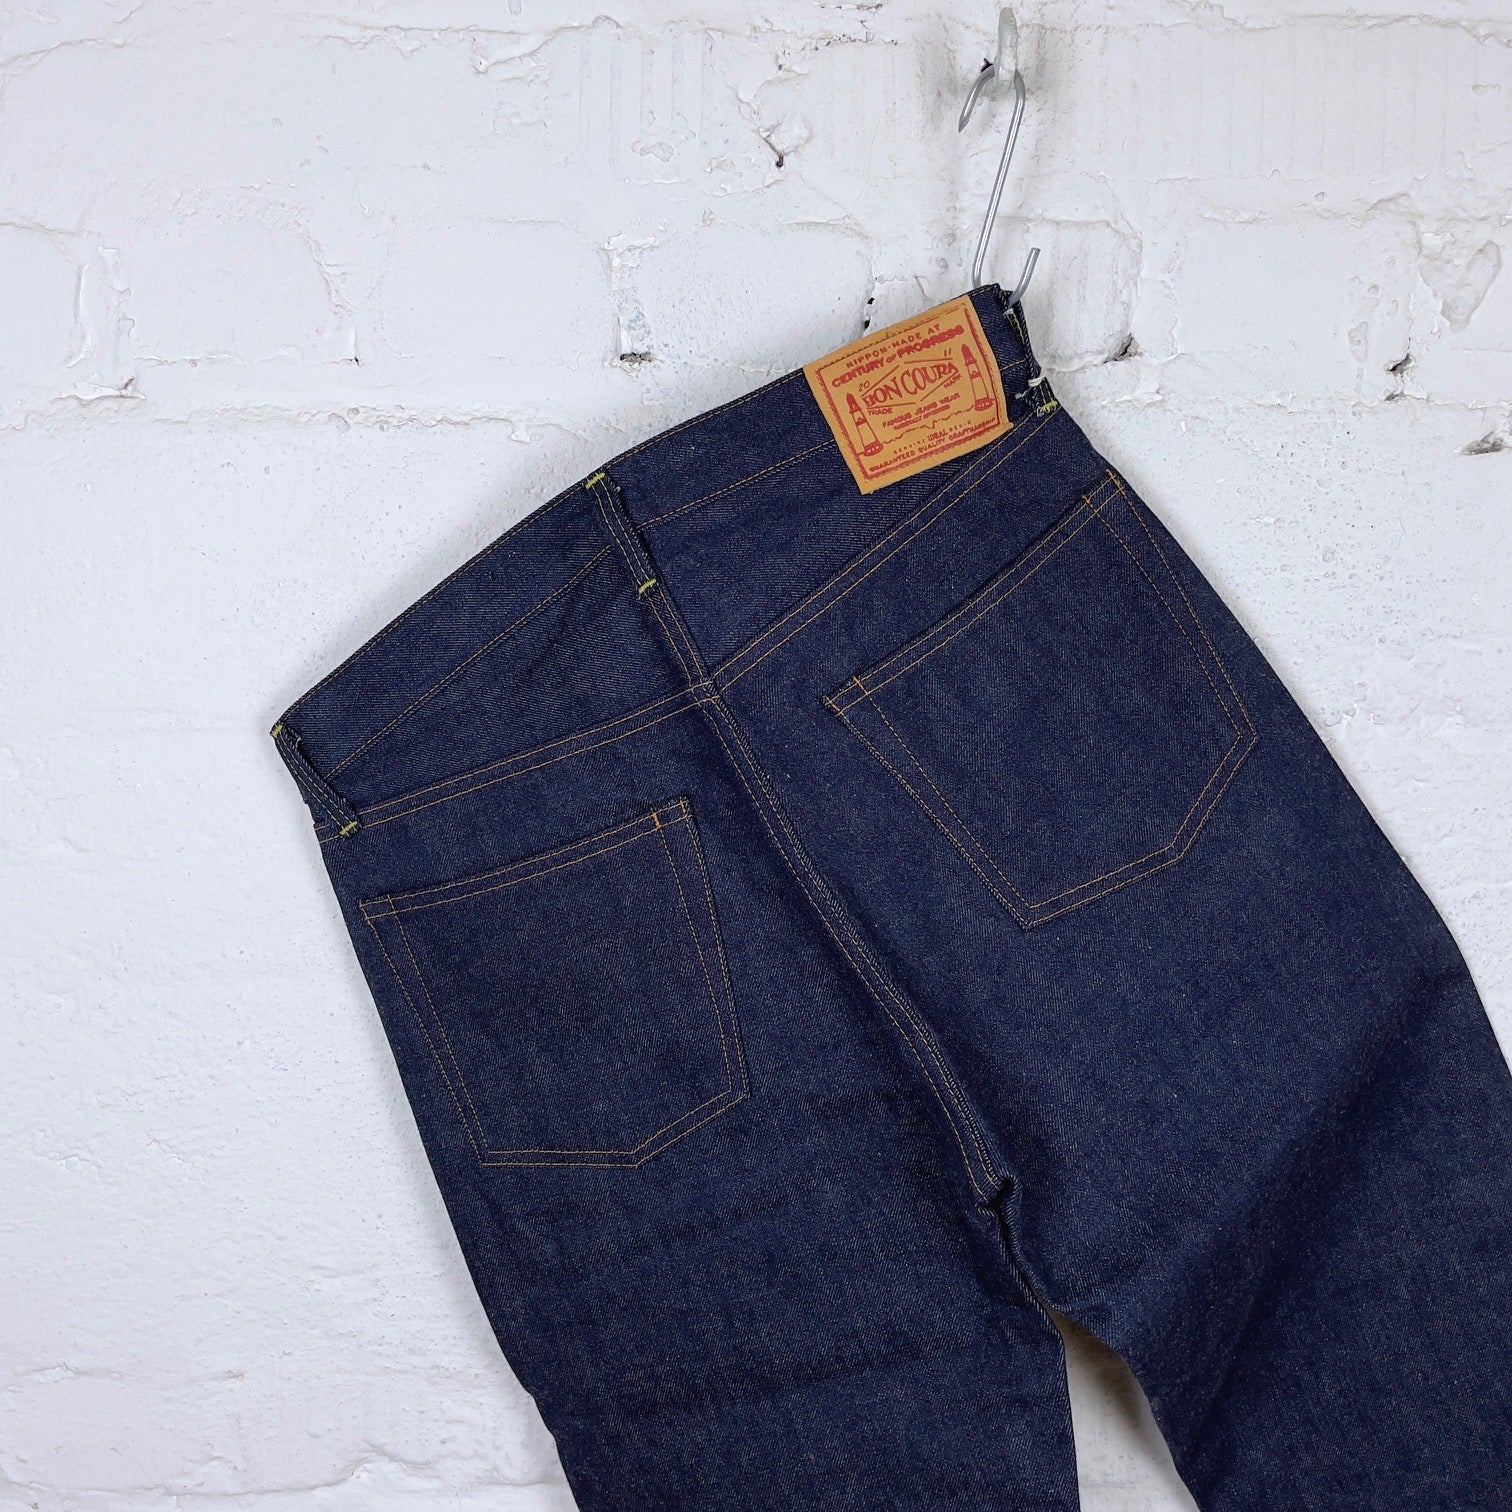 Boncoura Japanese Selvedge Indigo Jeans - '66 Straight Lightly-Tapered Leg